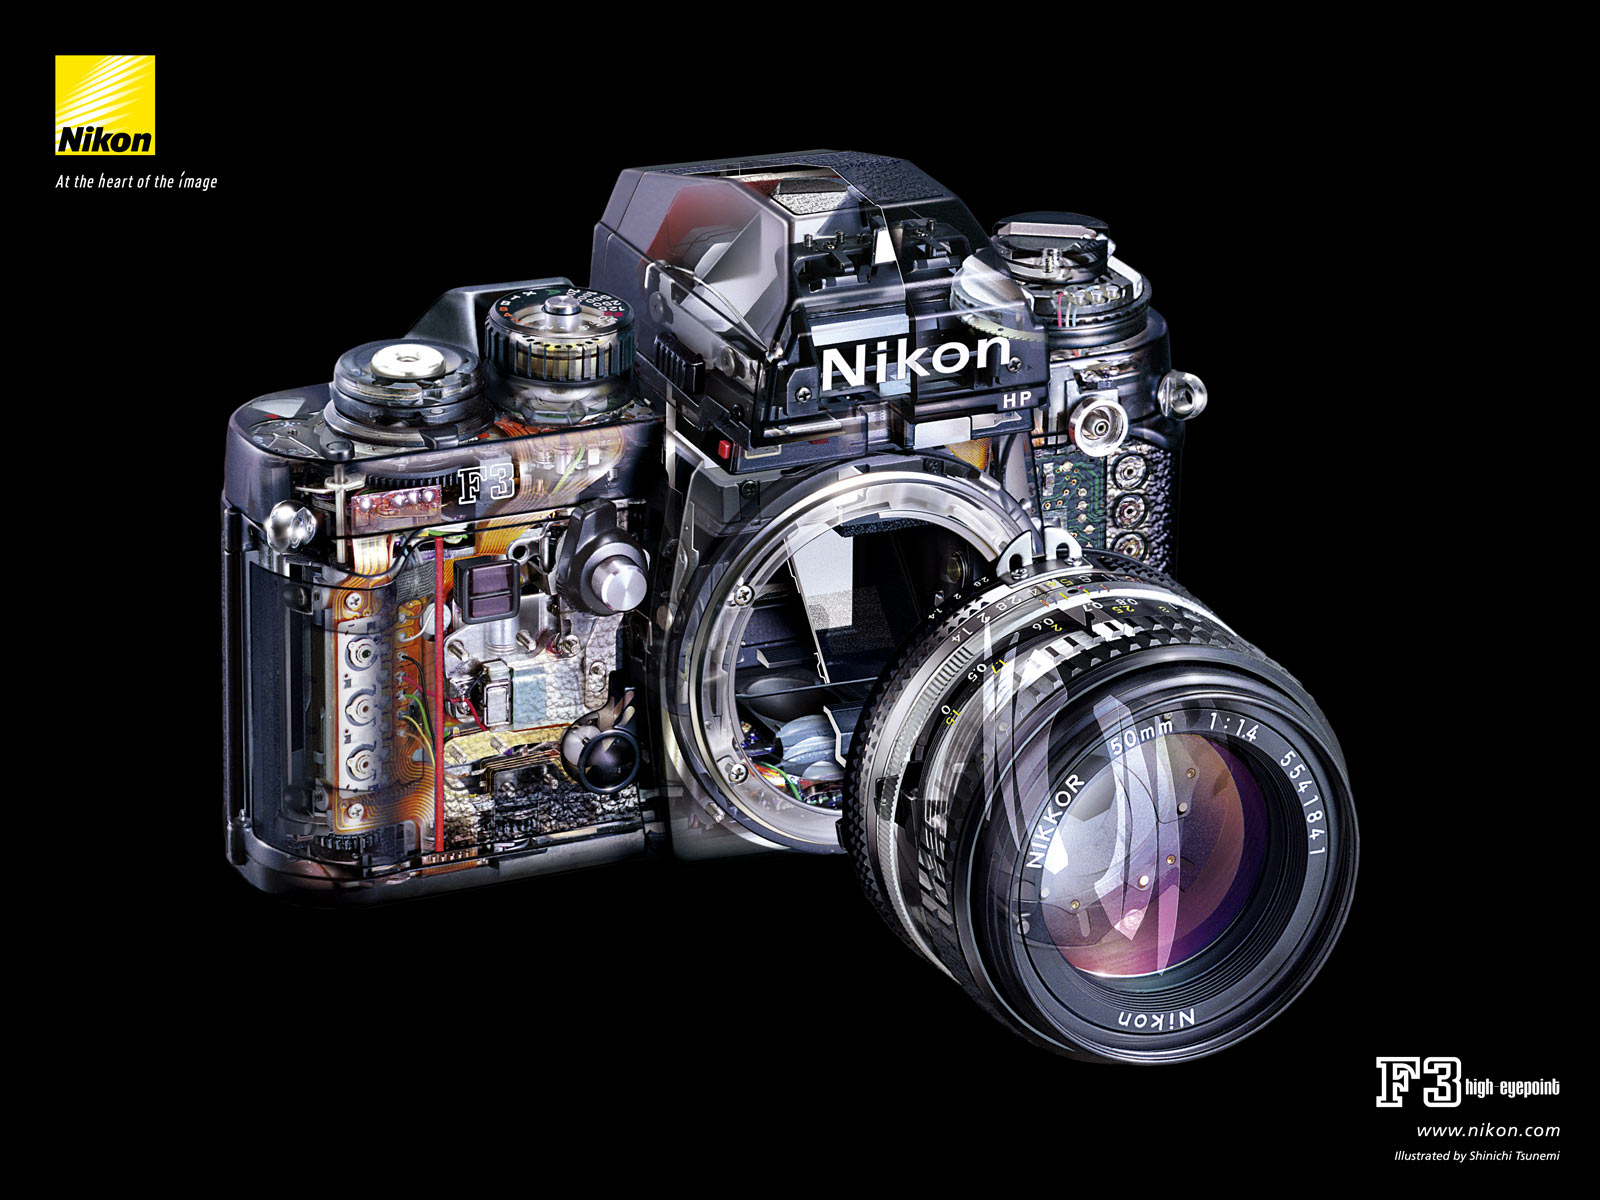 fond d'écran nikon hd,caméra,appareil photo reflex,appareil photo numérique,appareil photo reflex mono objectif,lentille